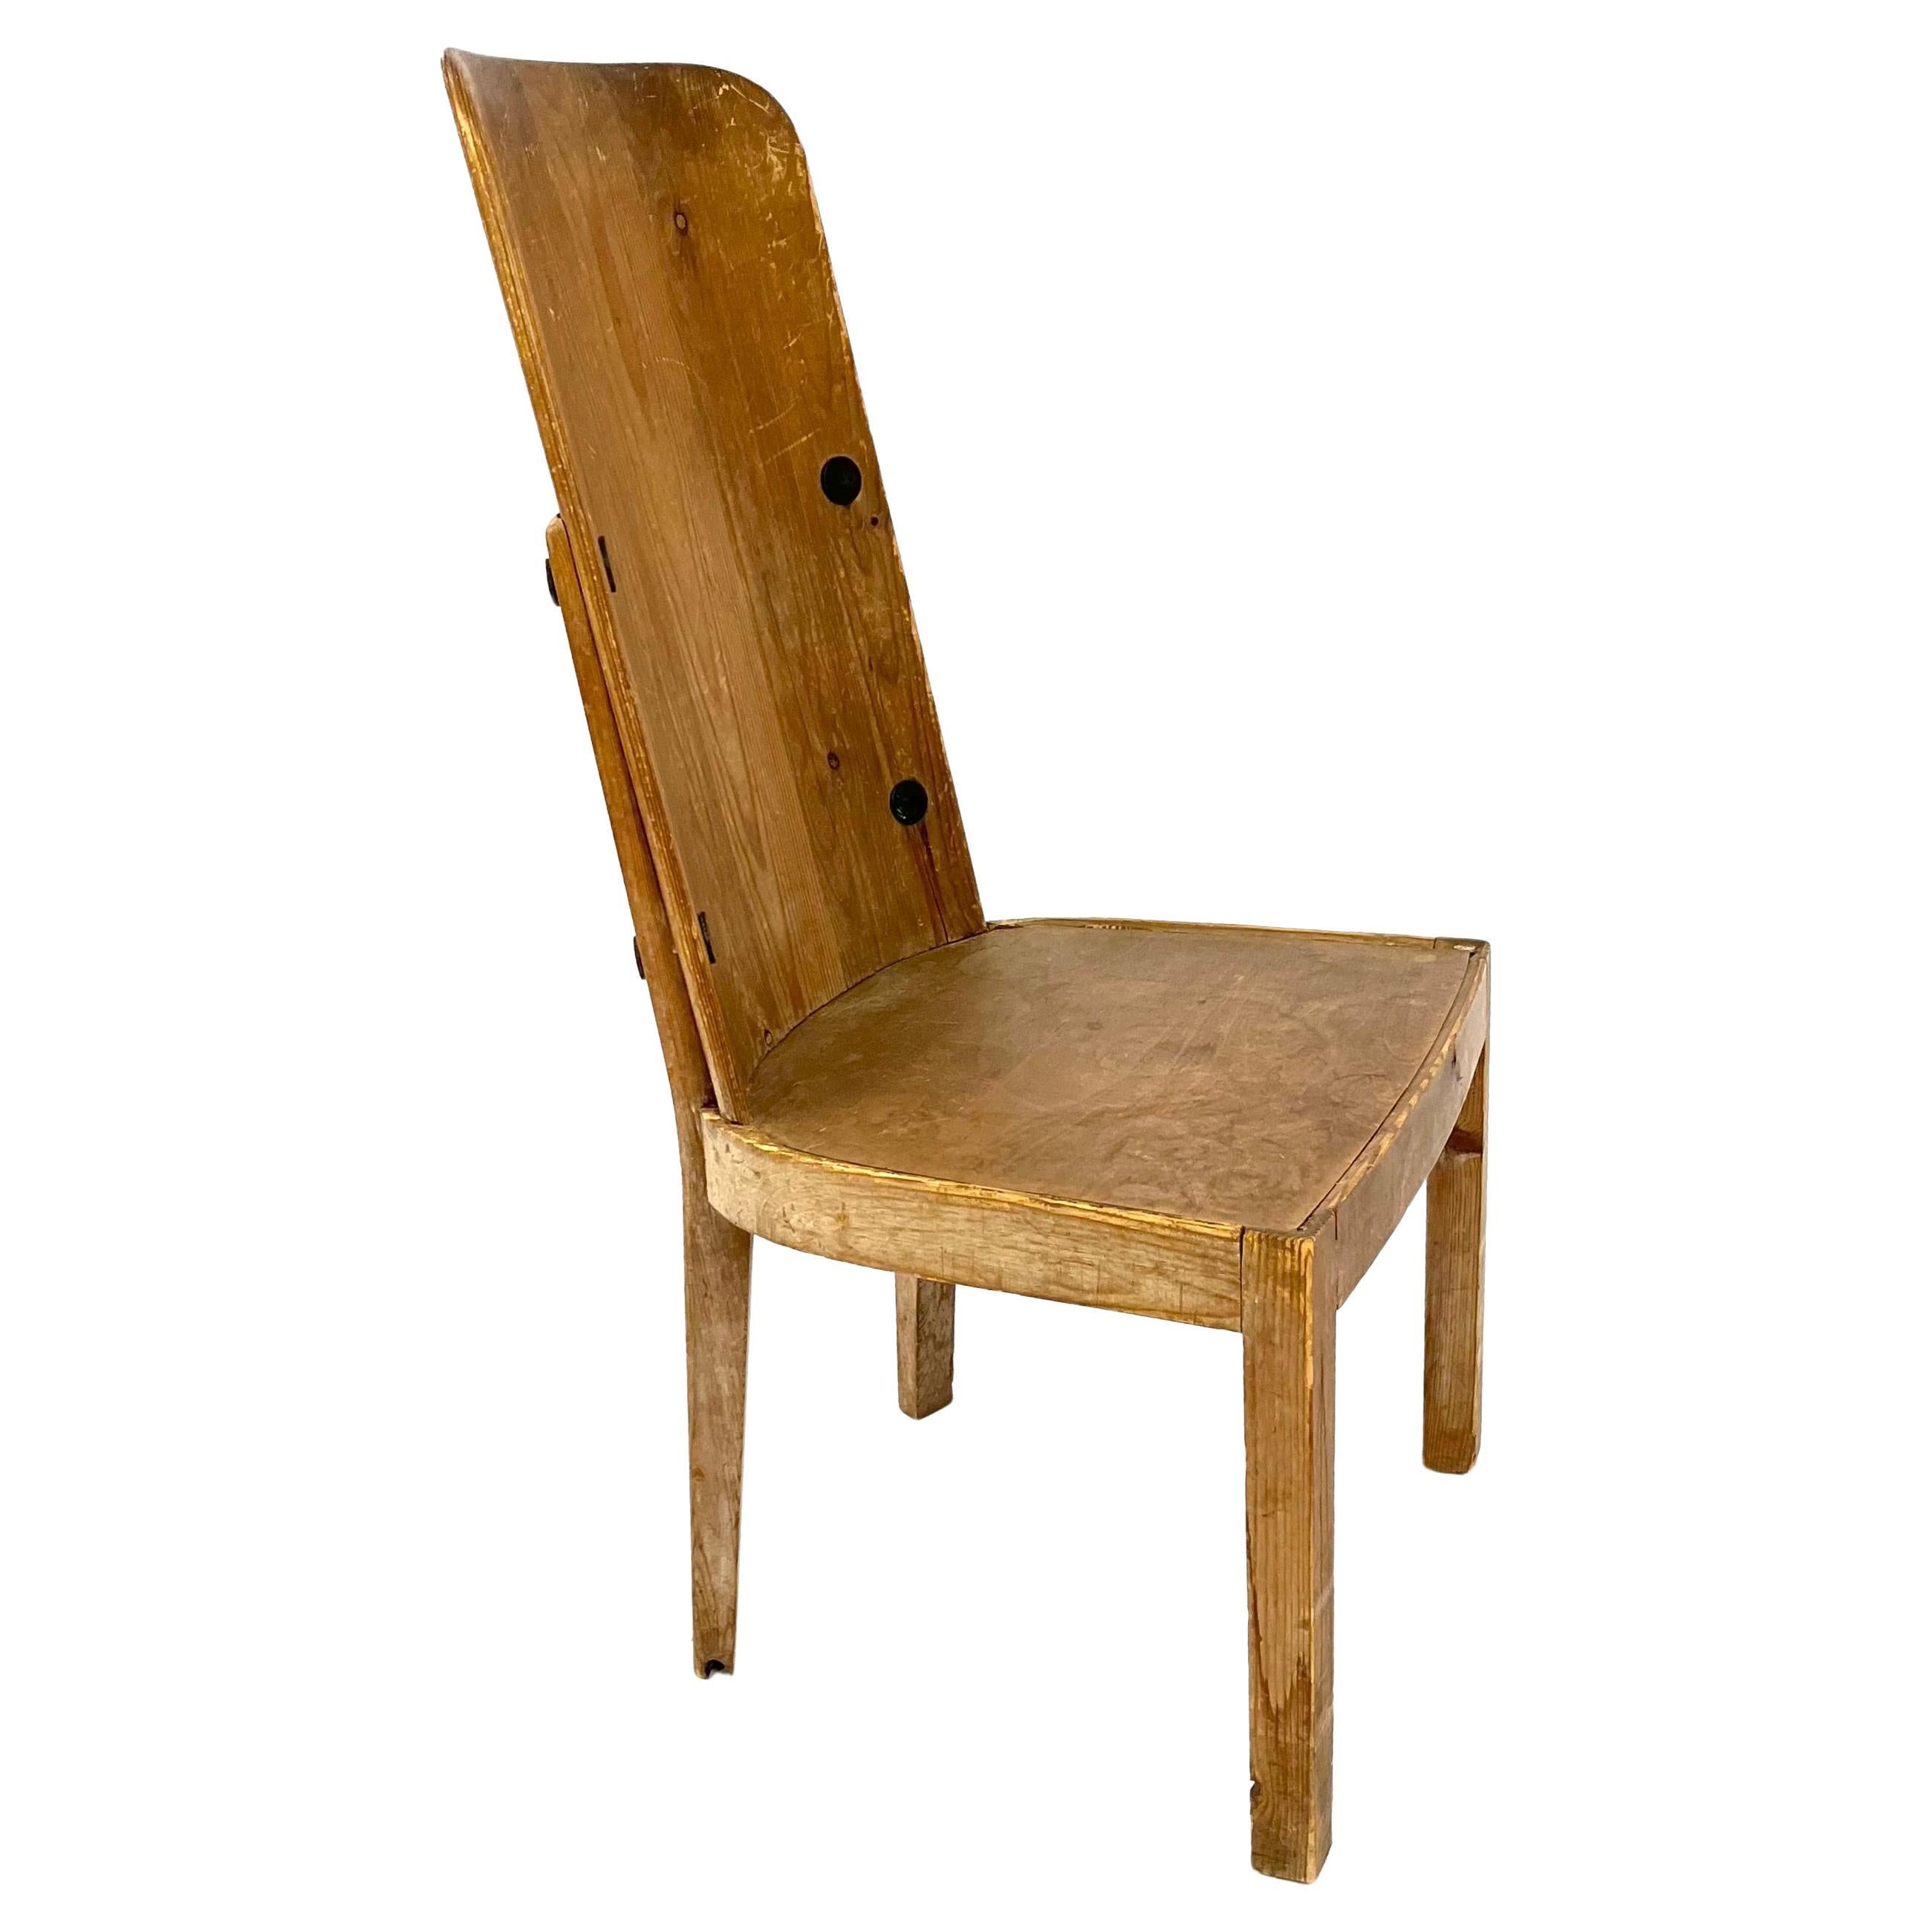 Lovö chair by Axel Einar Hjort for Nordiska Kompaniet 1930s For Sale